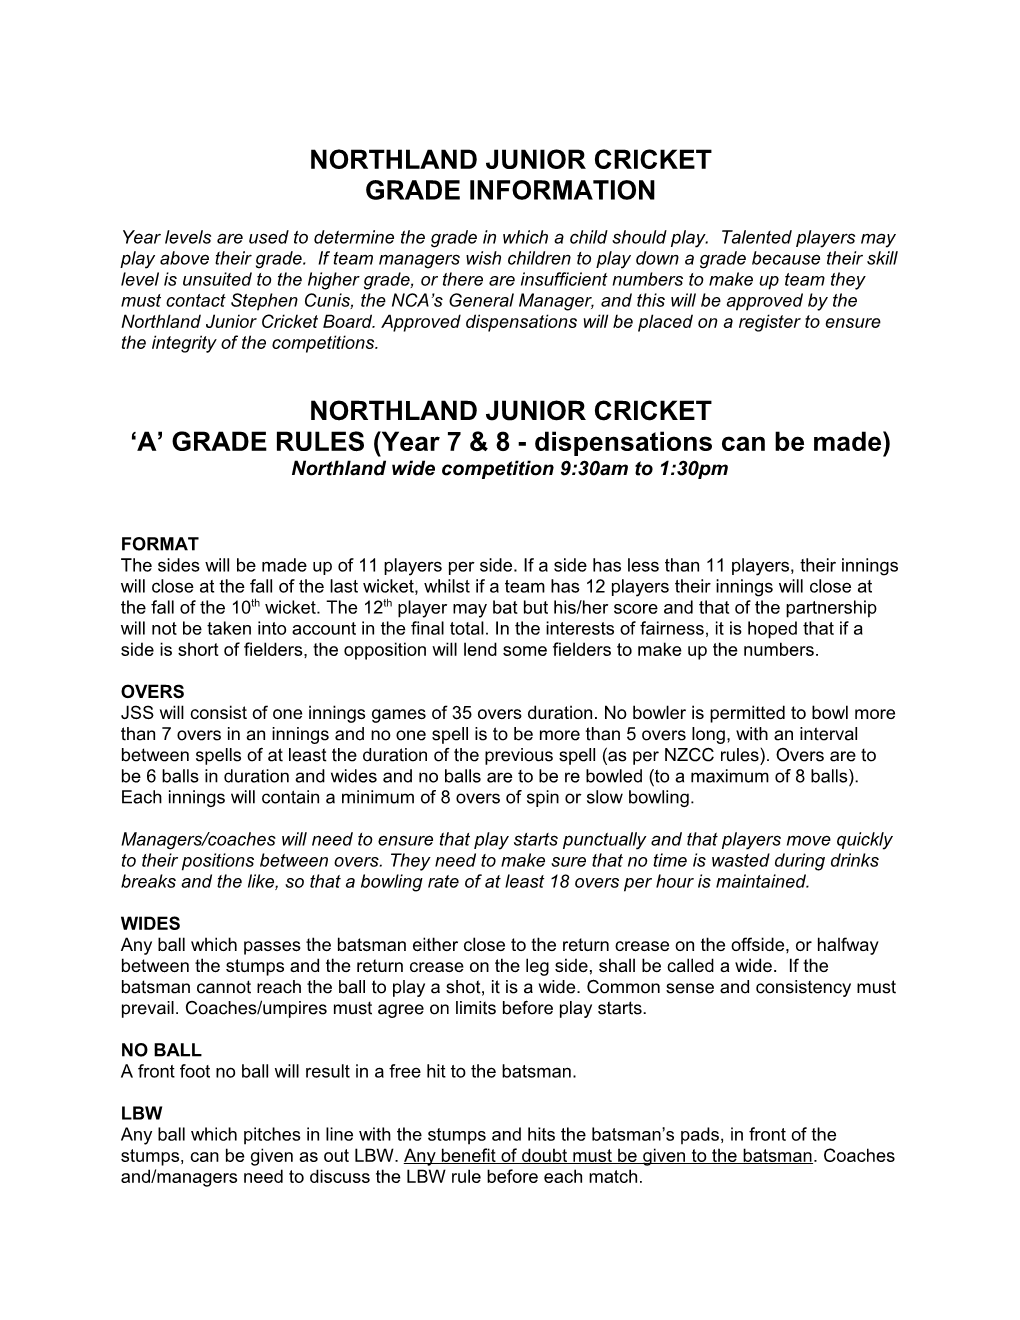 Northland Cricket Player Safety Regulations